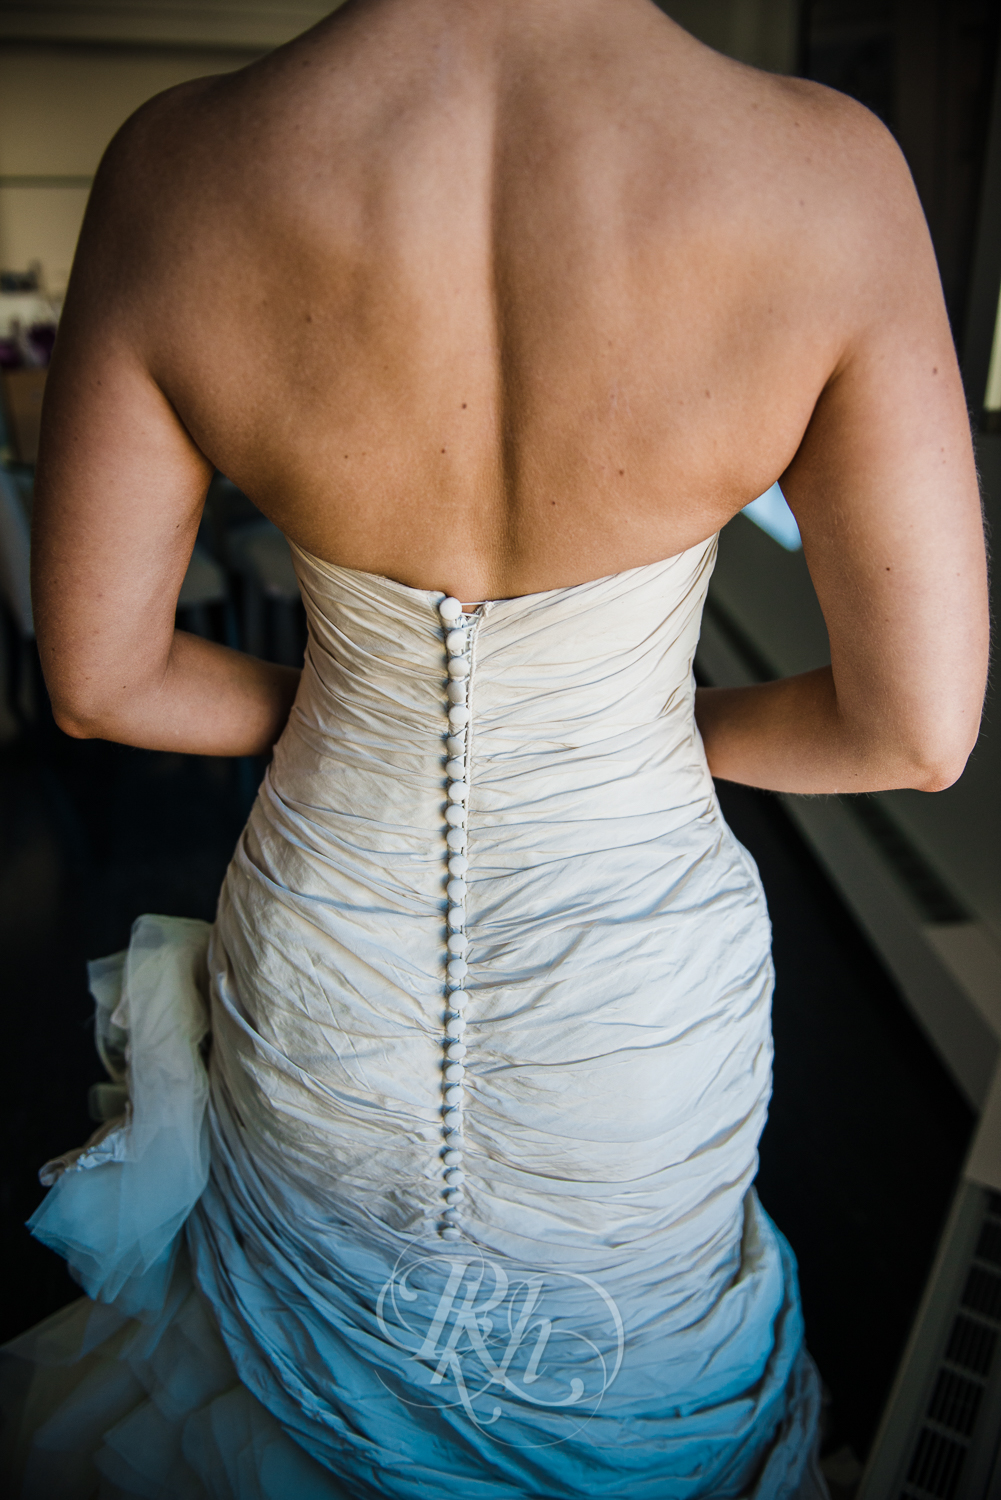  Minneapolis Wedding Photography - Becca & Justin - RKH Images-4 